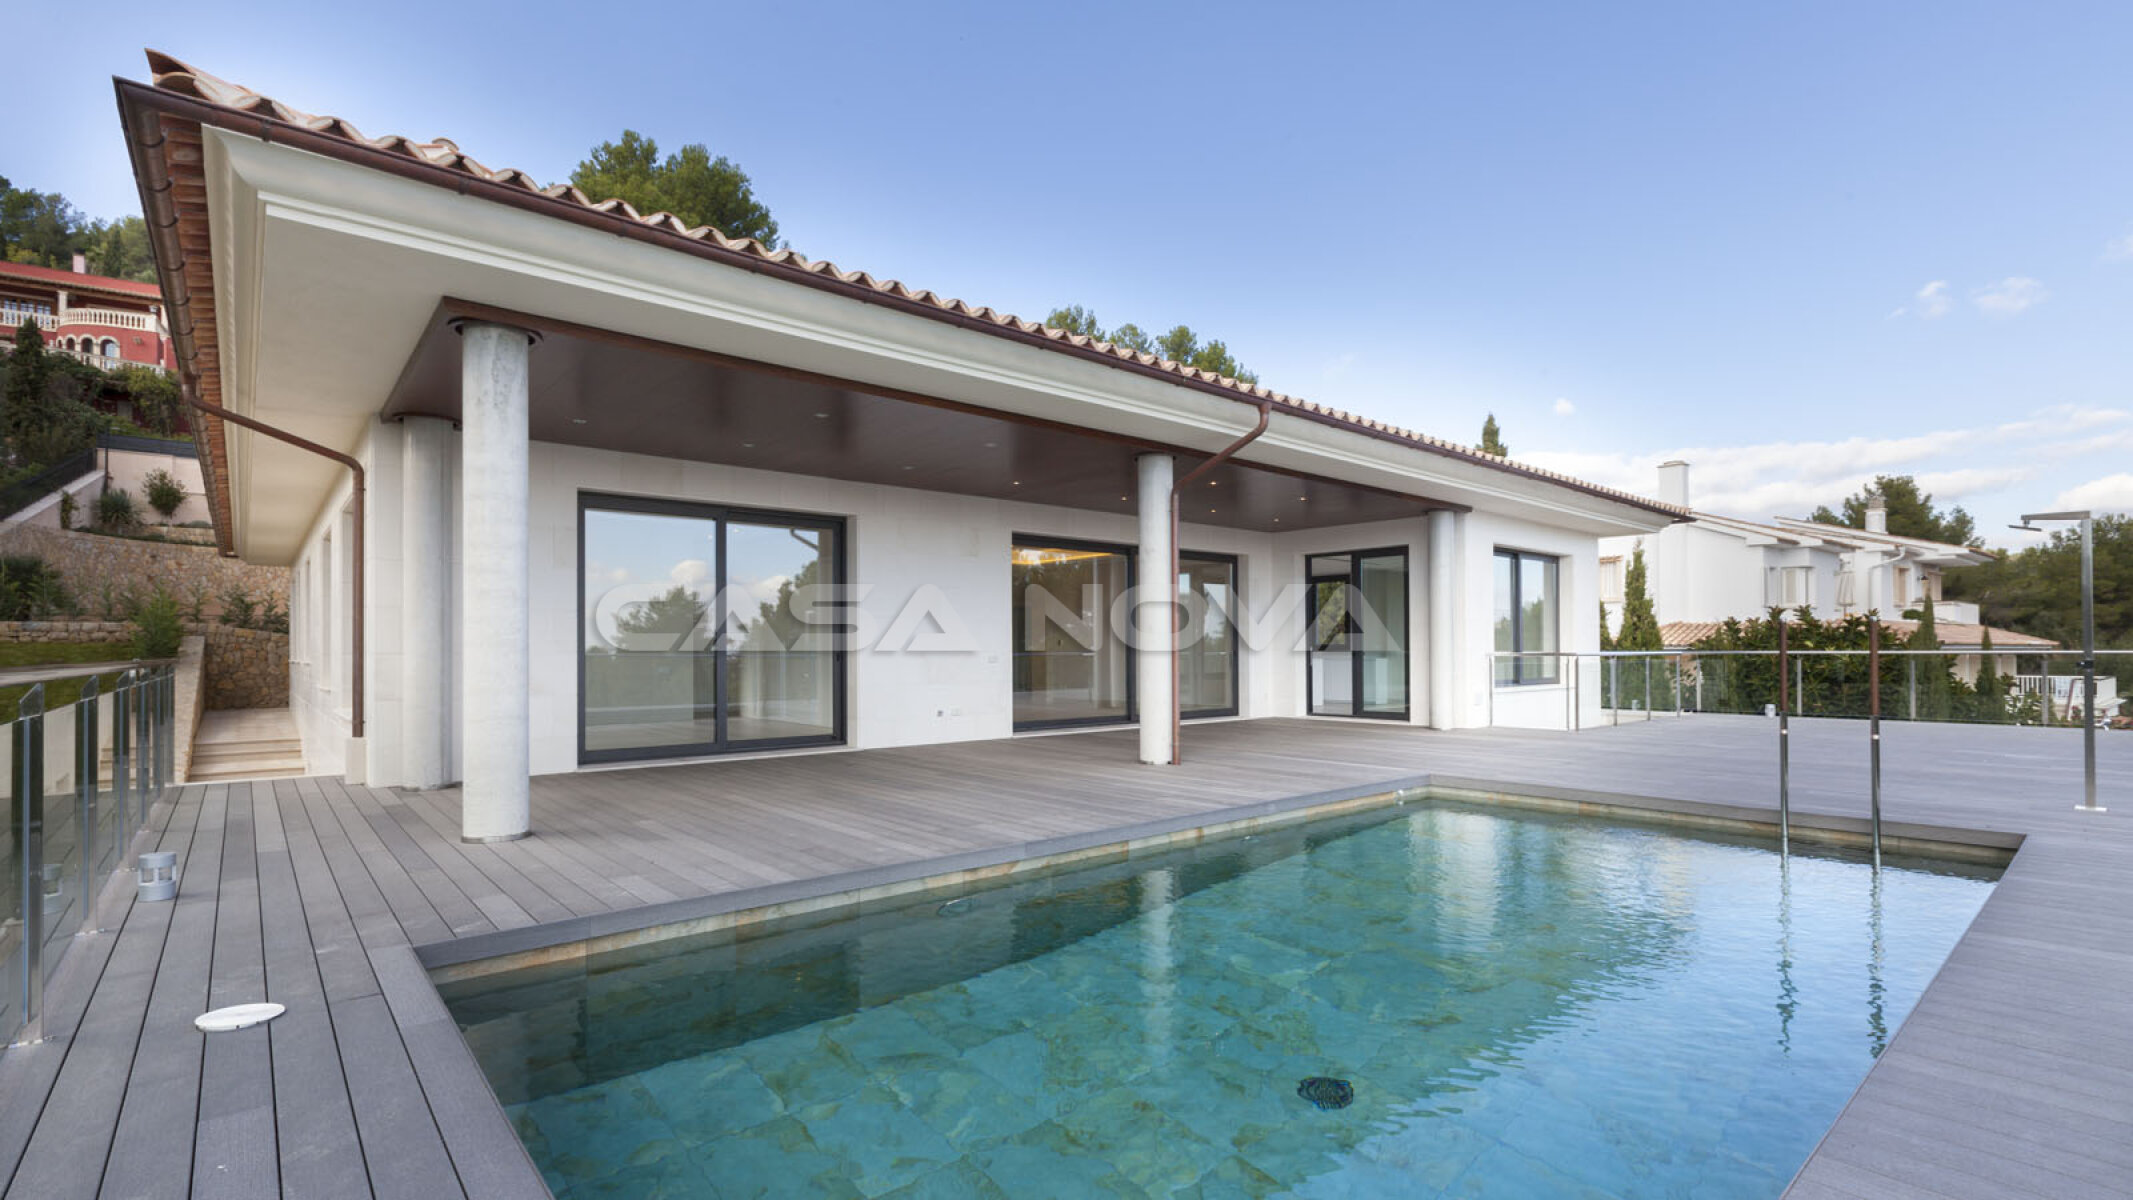 Son Vida: high quality new construction villa in luxury golf residential area 